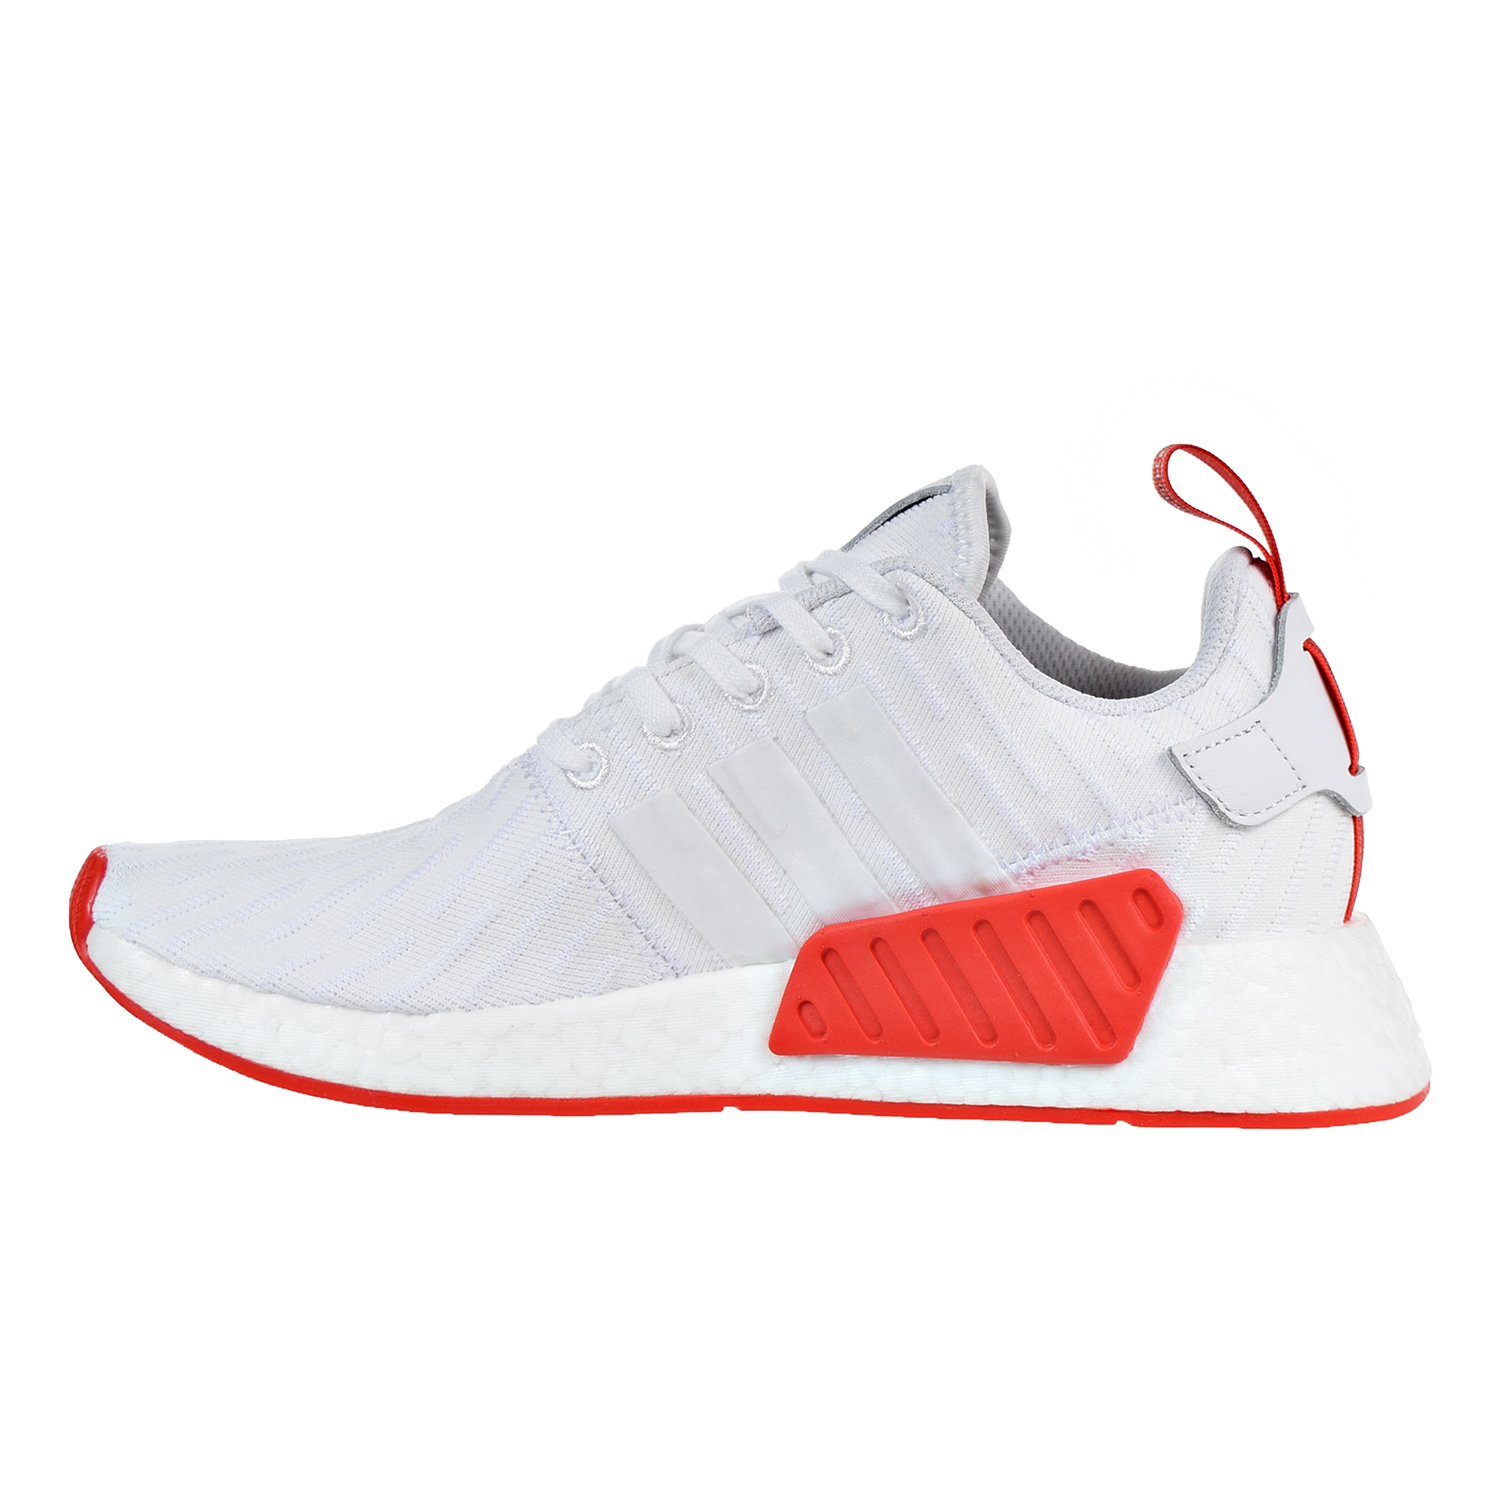 Adidas NMD_R2 Primeknit Men's Shoe White-Core Red ba7253